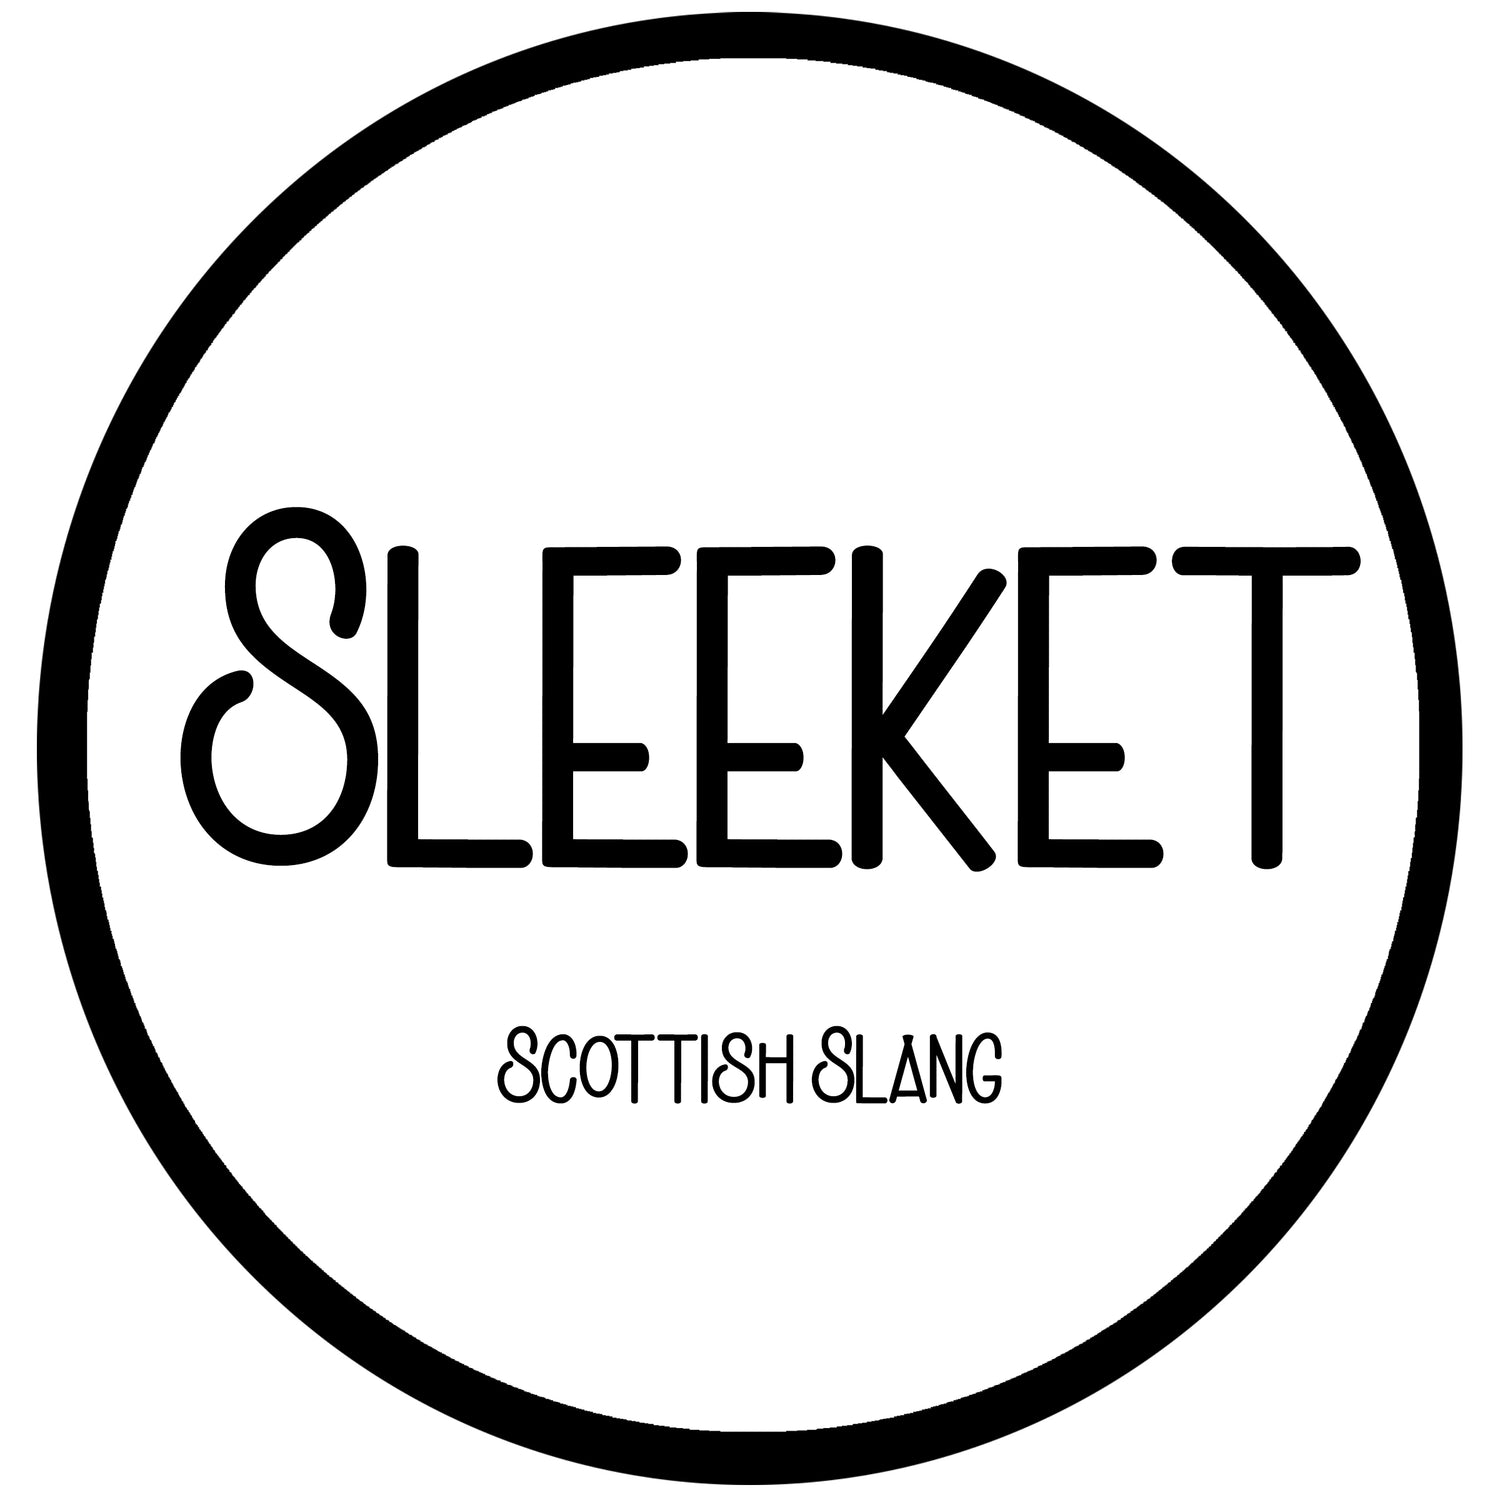 Sleeket - Scots Slang